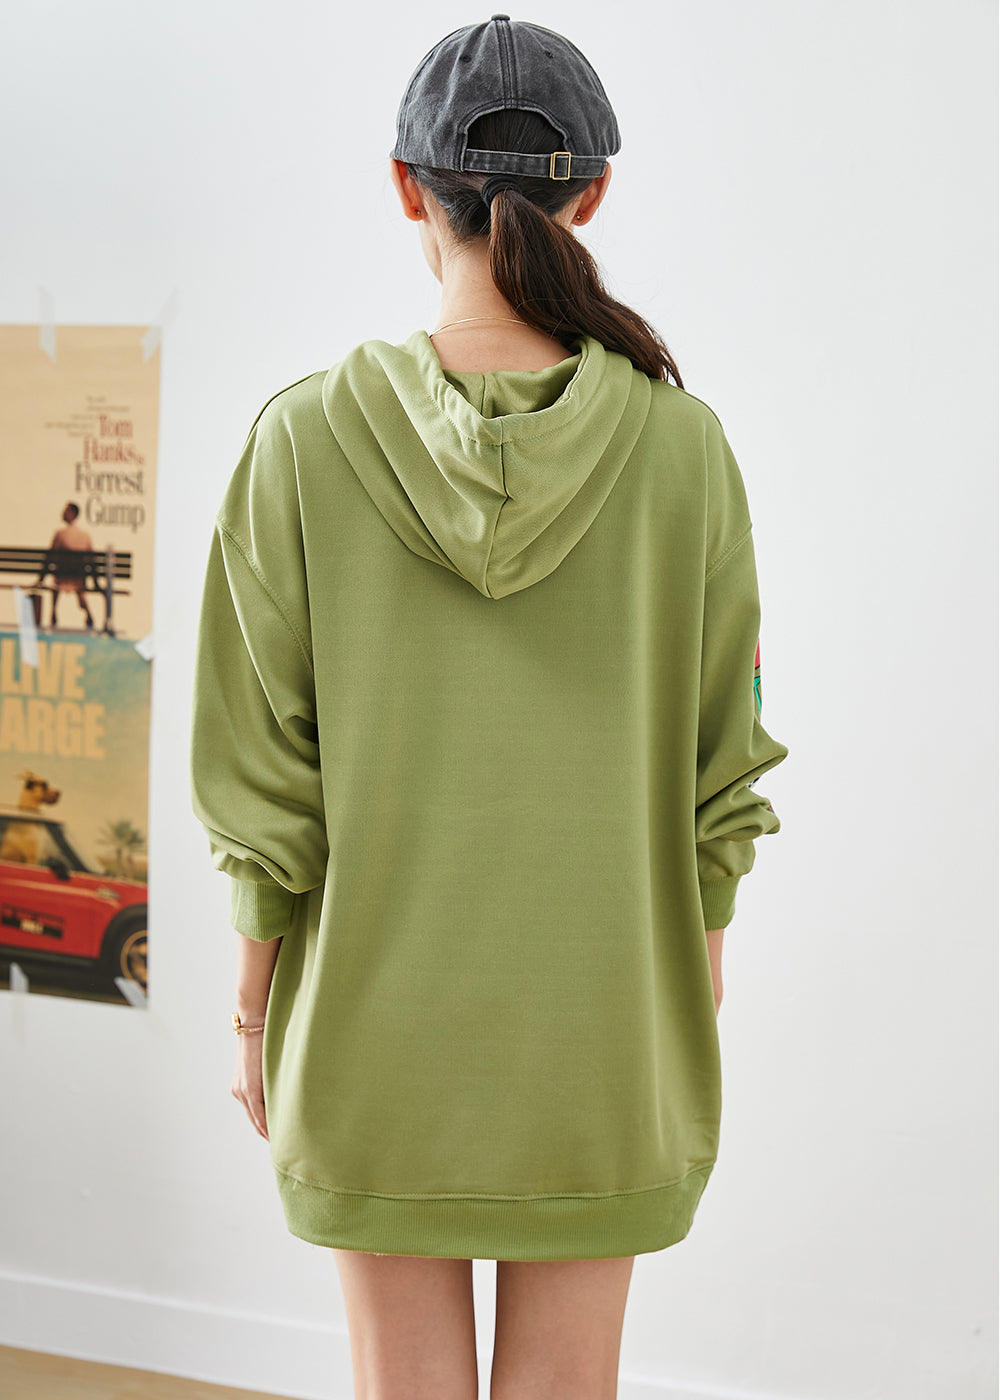 Modern Green Hooded Cartoon Print Cotton Sweatshirts Top Fall